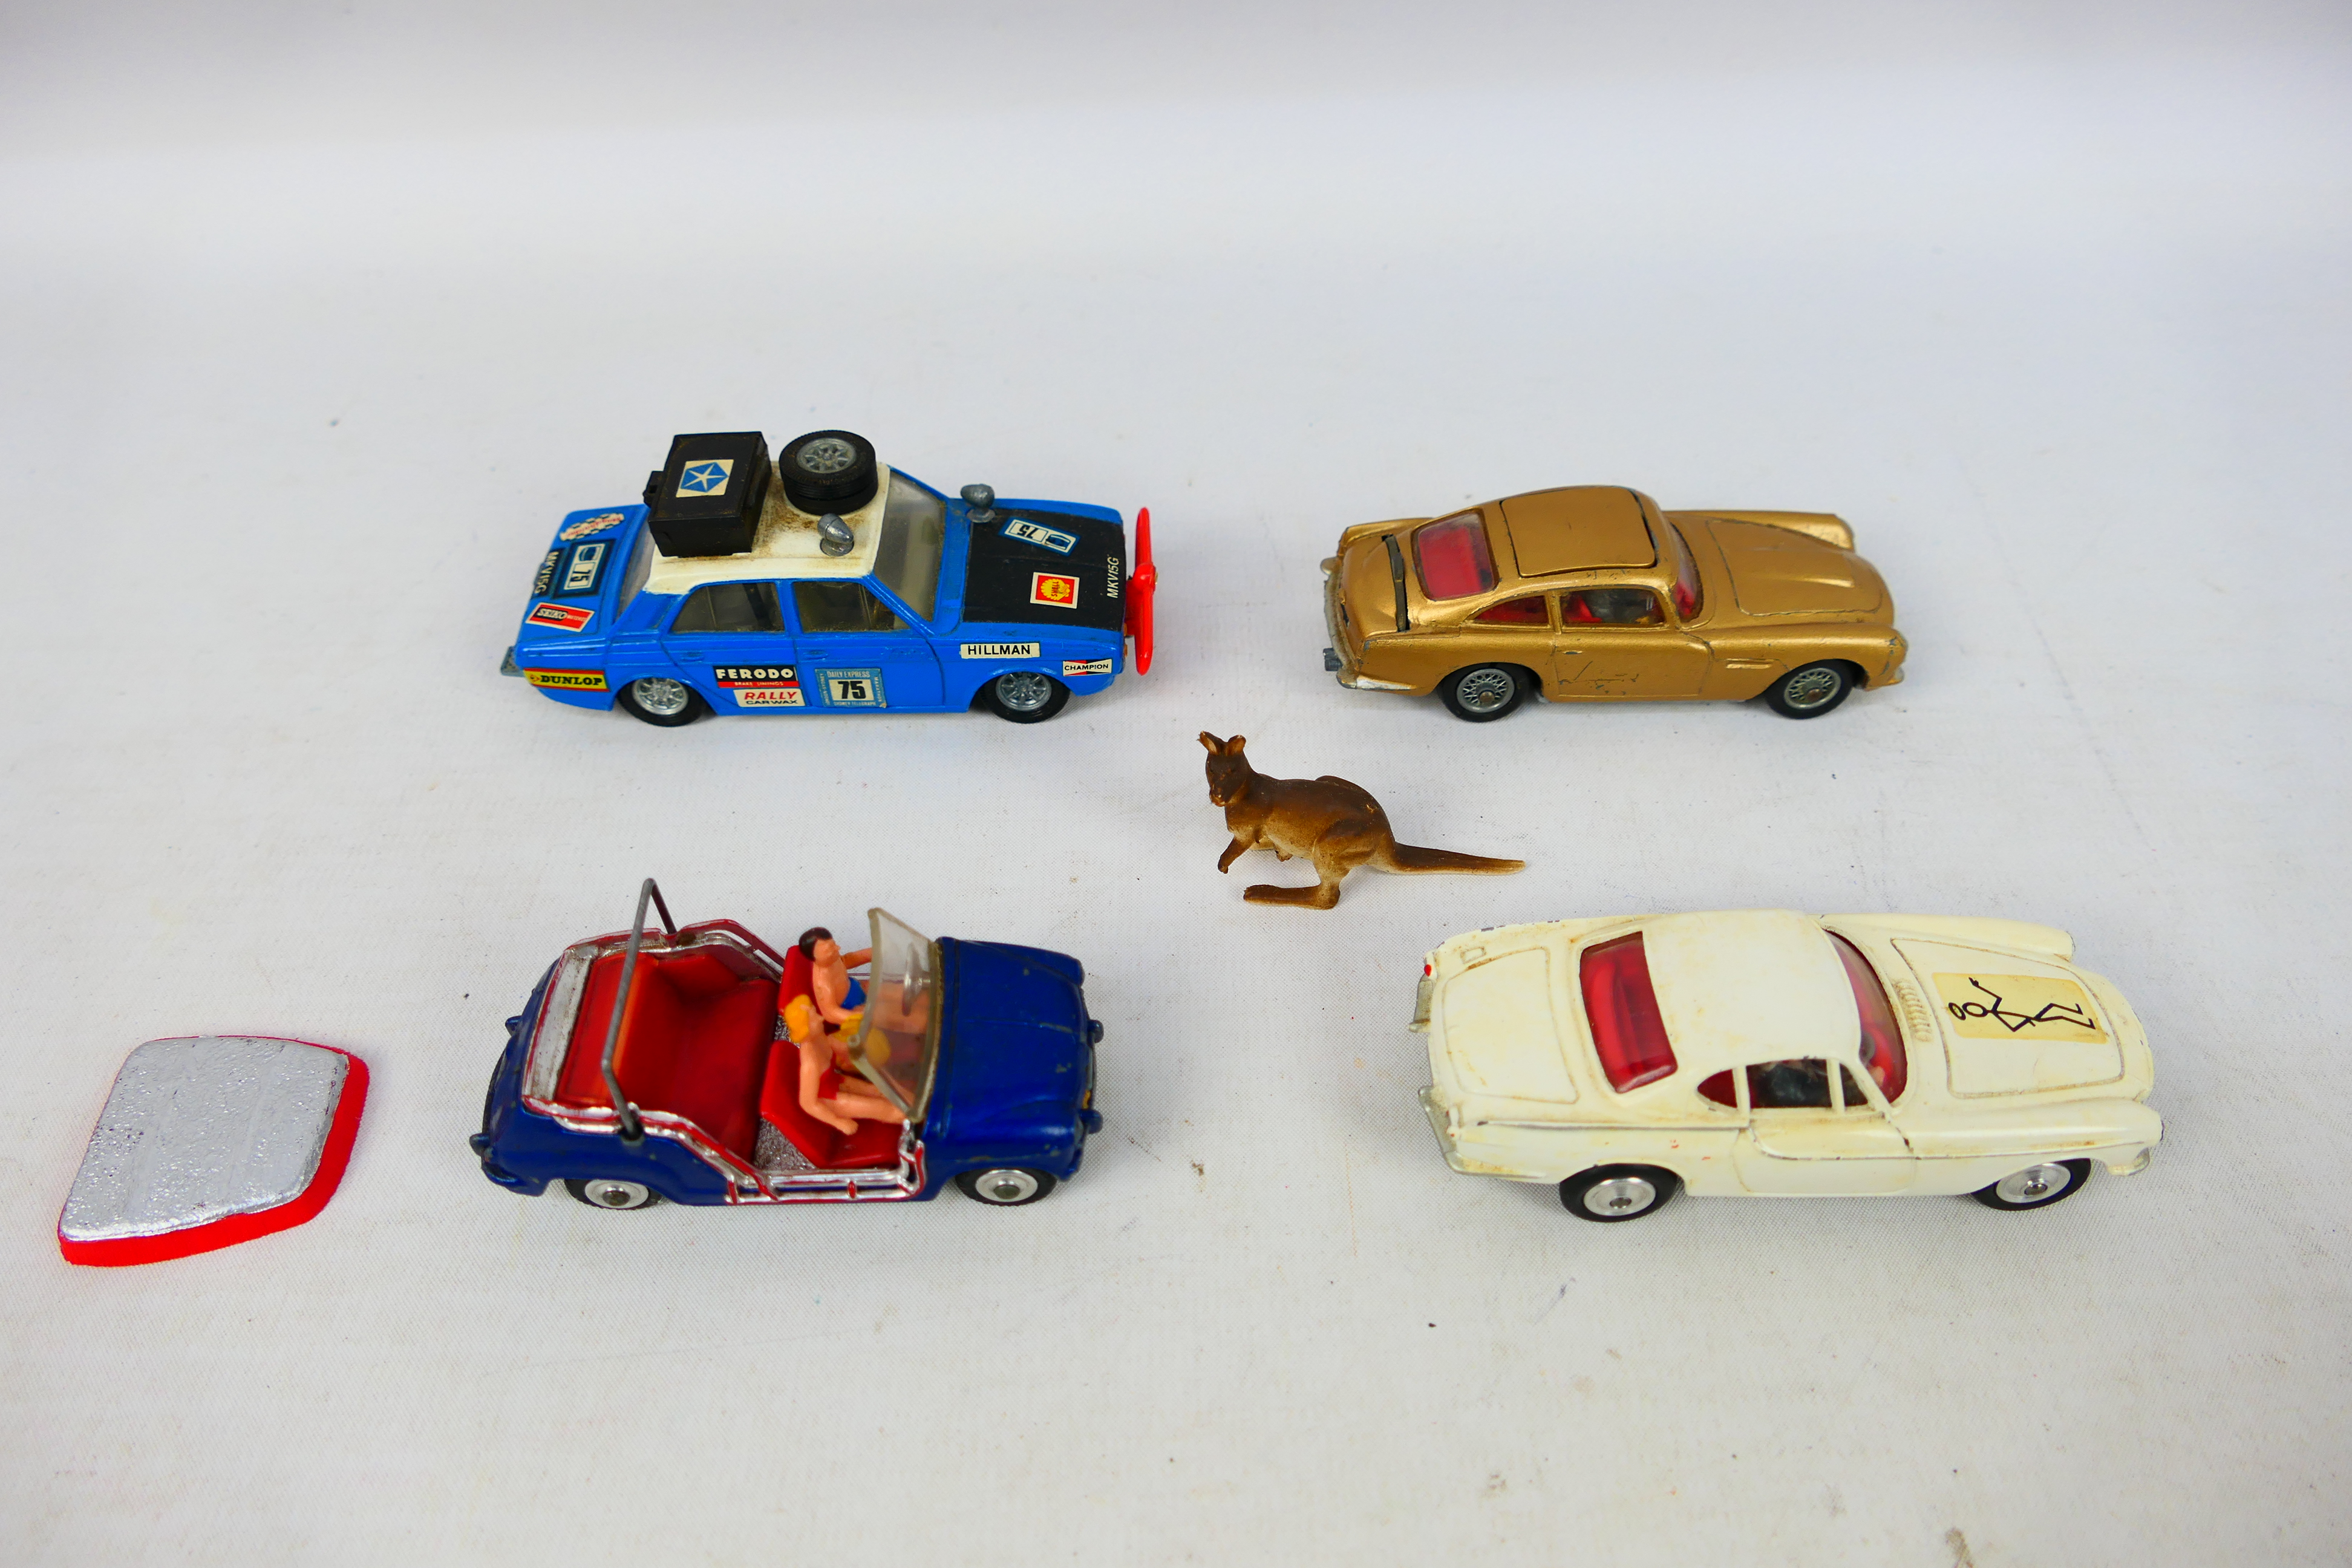 Corgi Toys - Four unboxed diecast model cars from Corgi Toys.